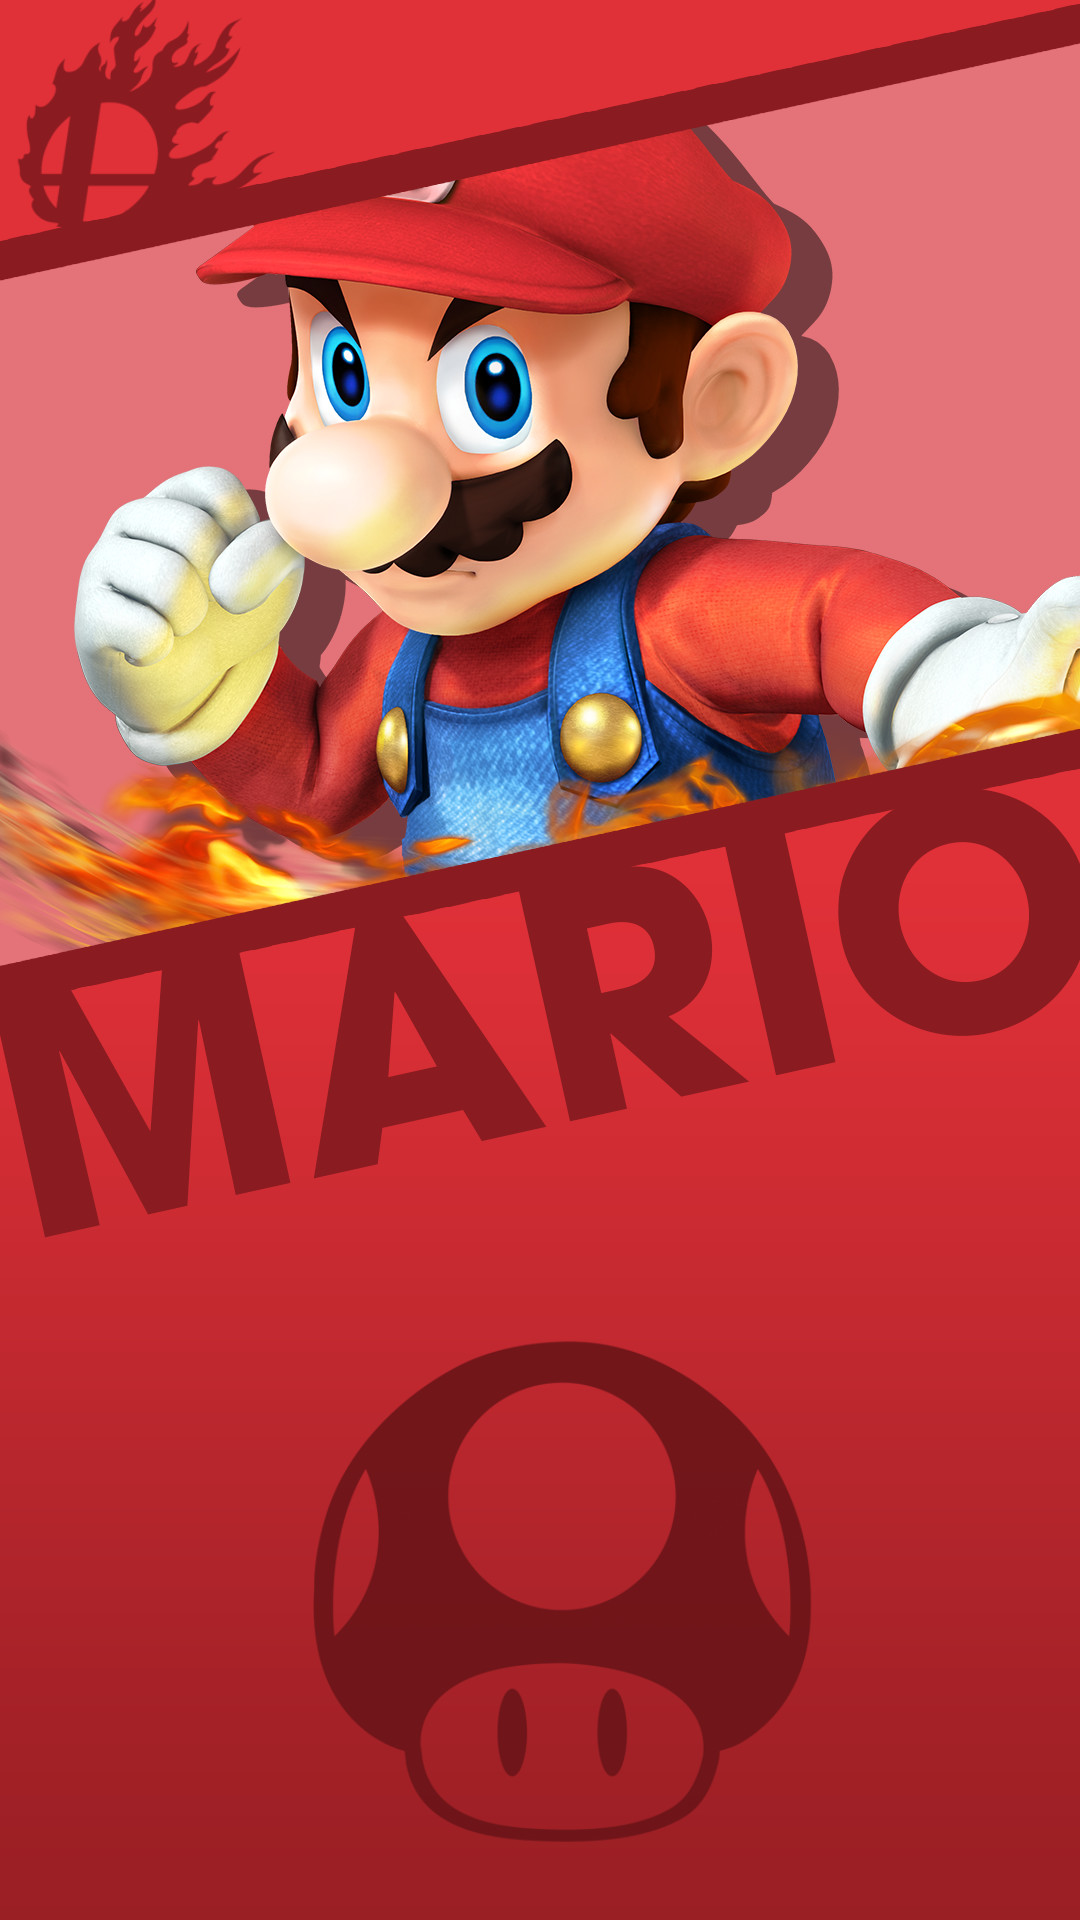 Mario Smash Bros. Phone Wallpaper by MrThatKidAlex24 on .